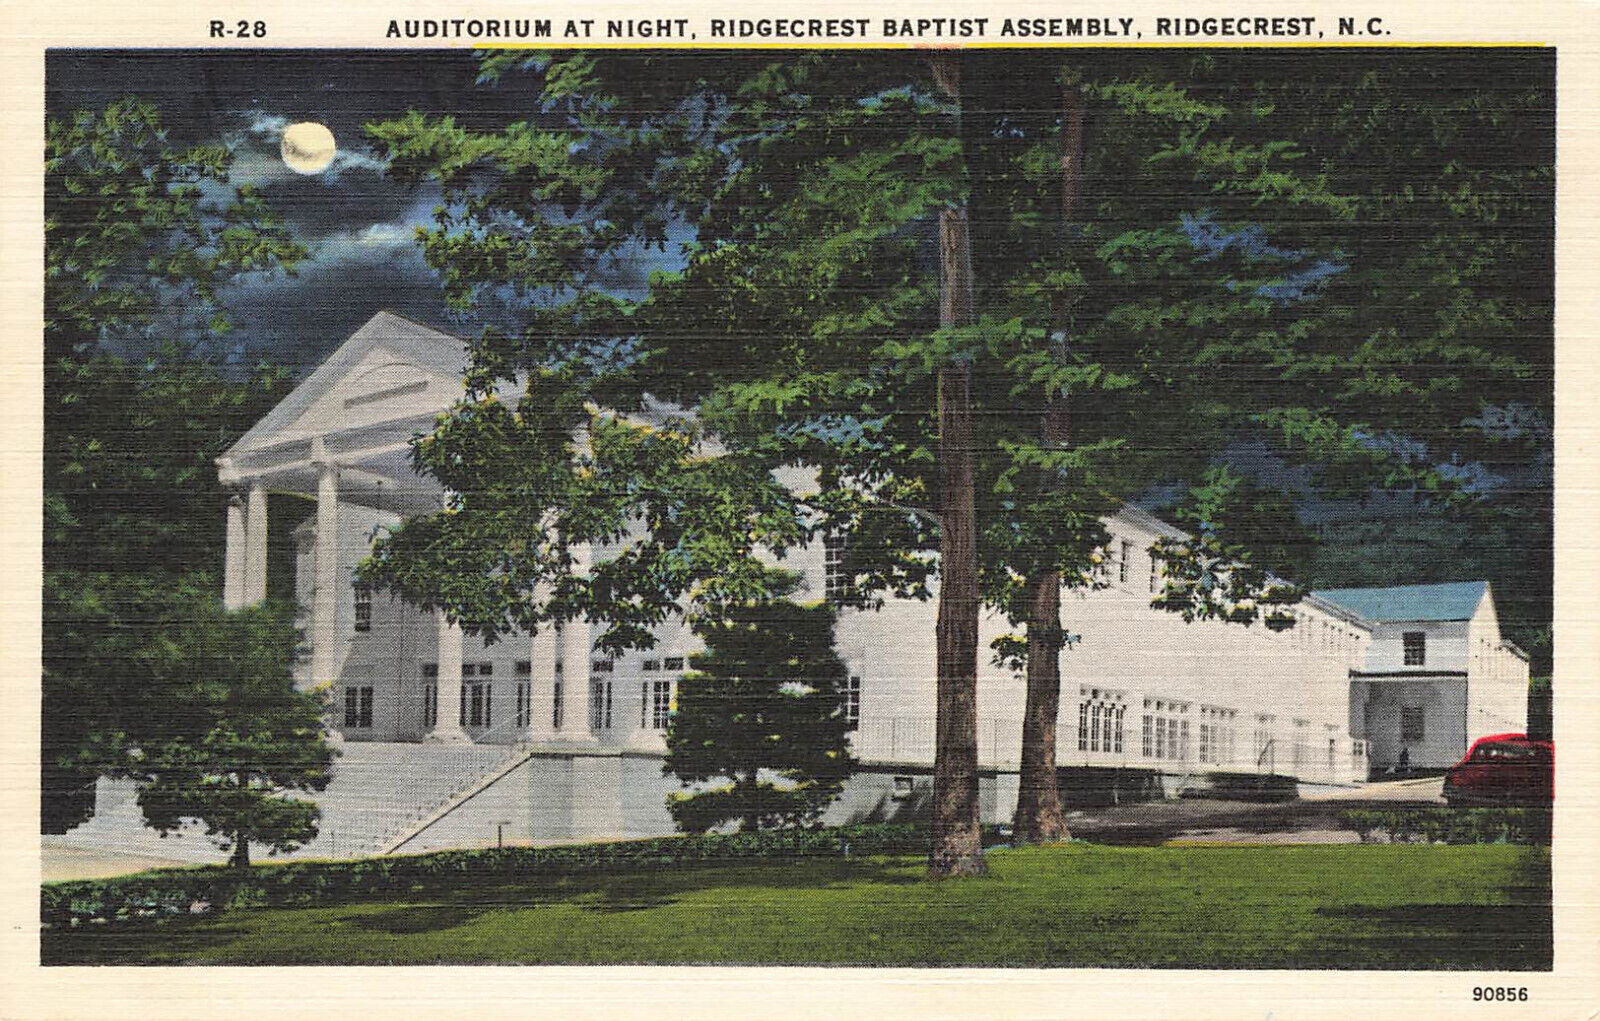 BAPTIST ASSEMBLY AUDITORIUM AT NIGHT POSTCARD RIDGECREST NC NORTH CAROLINA 1930s